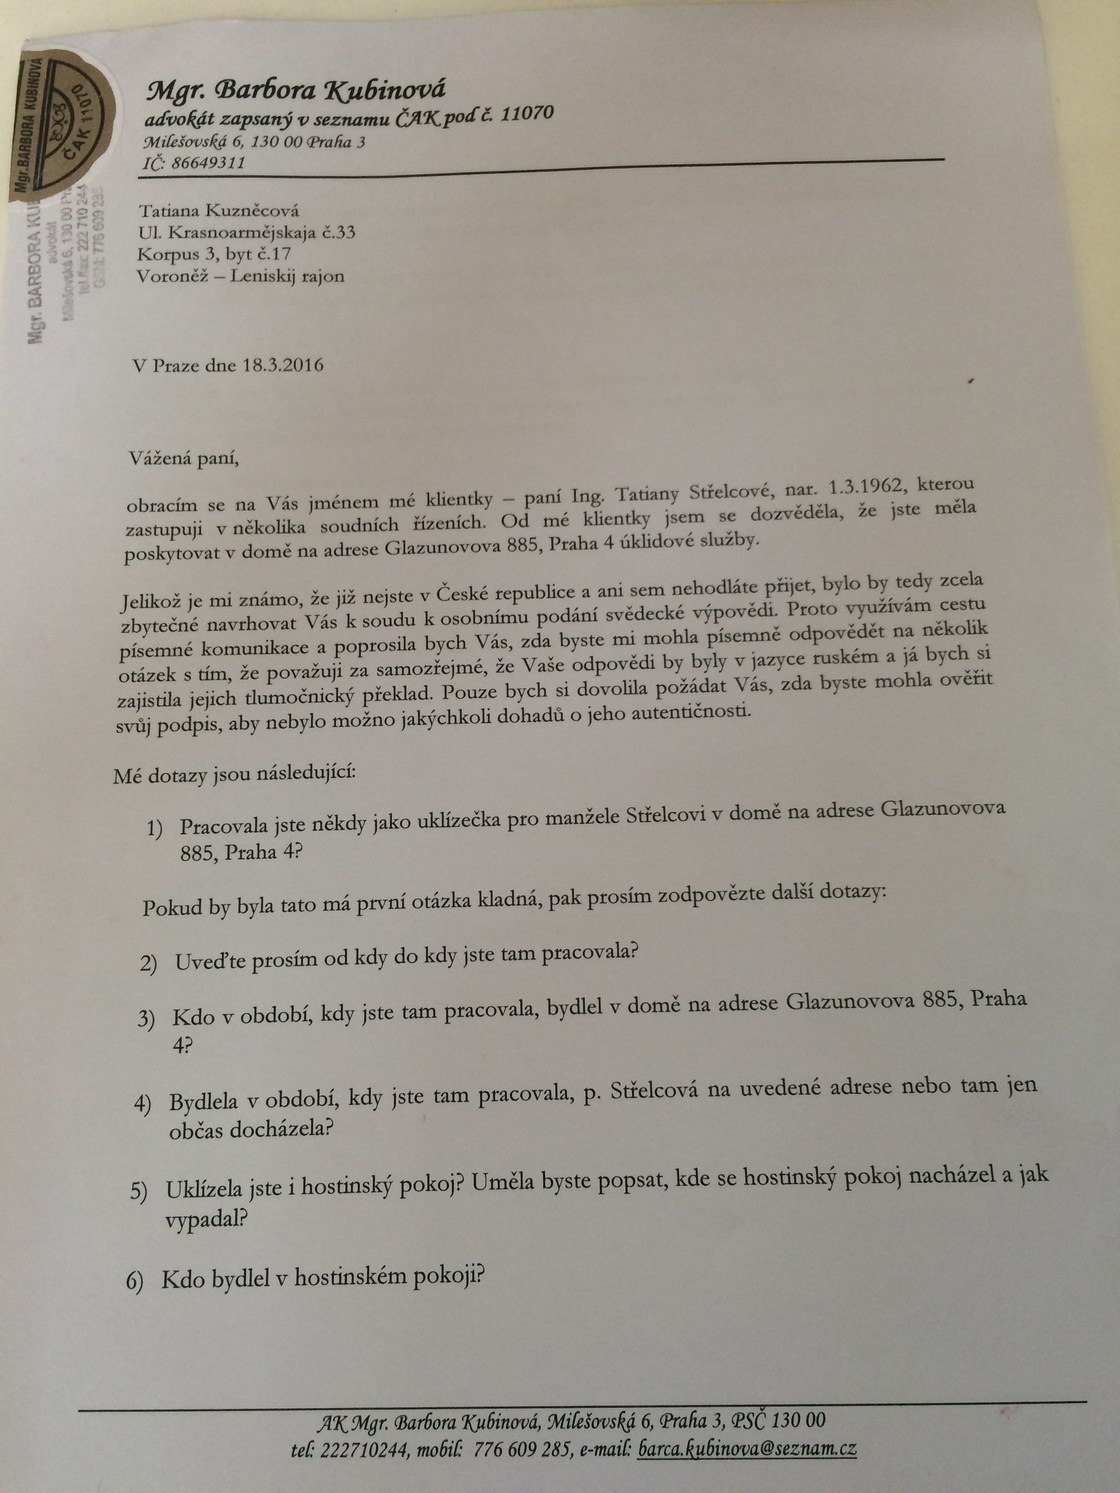 Milostny dopis-otazky a odpovedi pani Bojko, ktera u nas pracovala a nasla "udajny dopis"